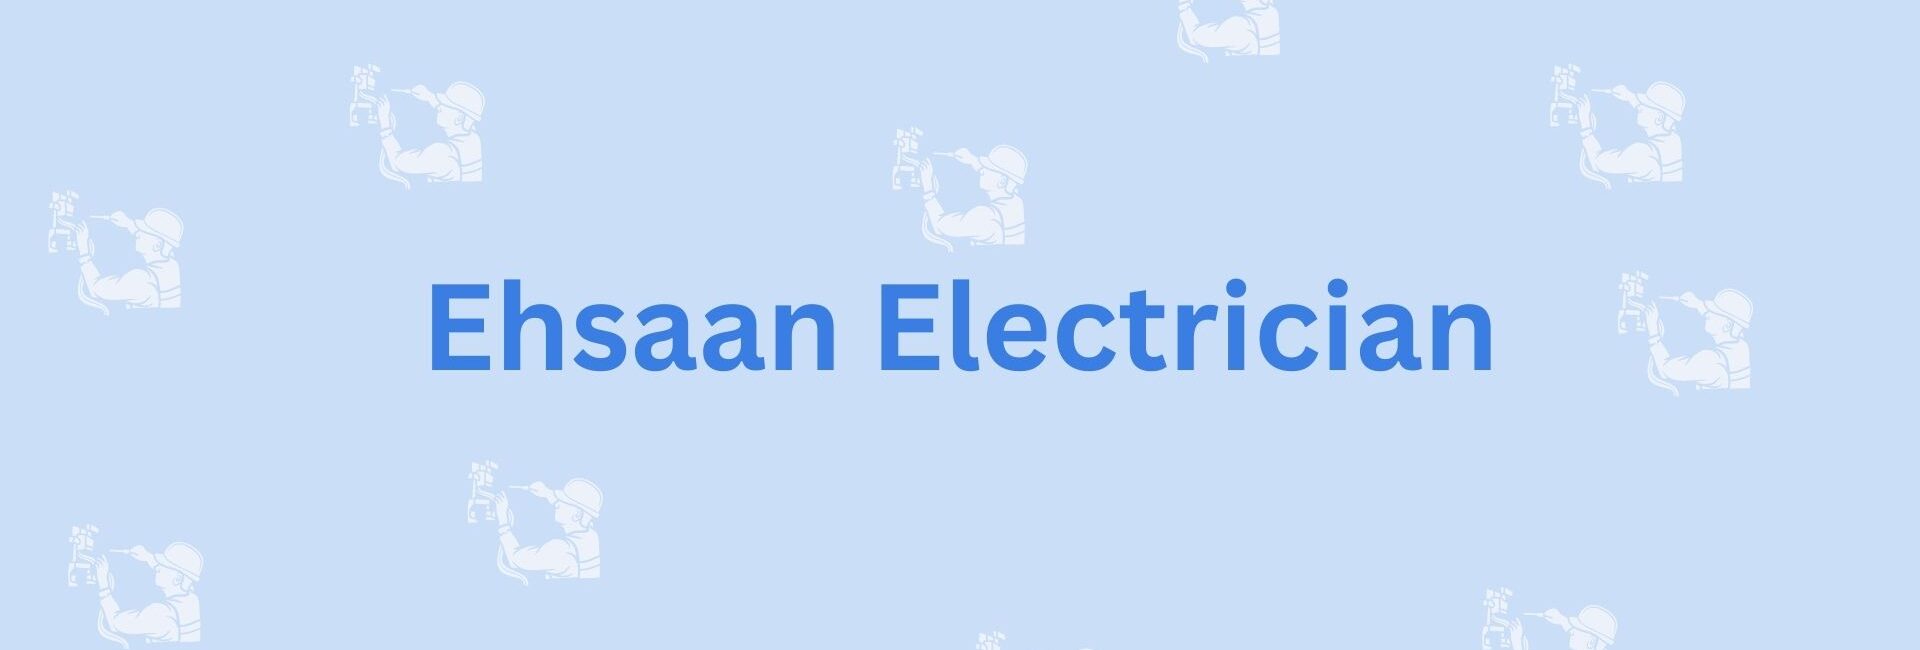 Ehsaan Electrician- Noida's Electrician Service Provider